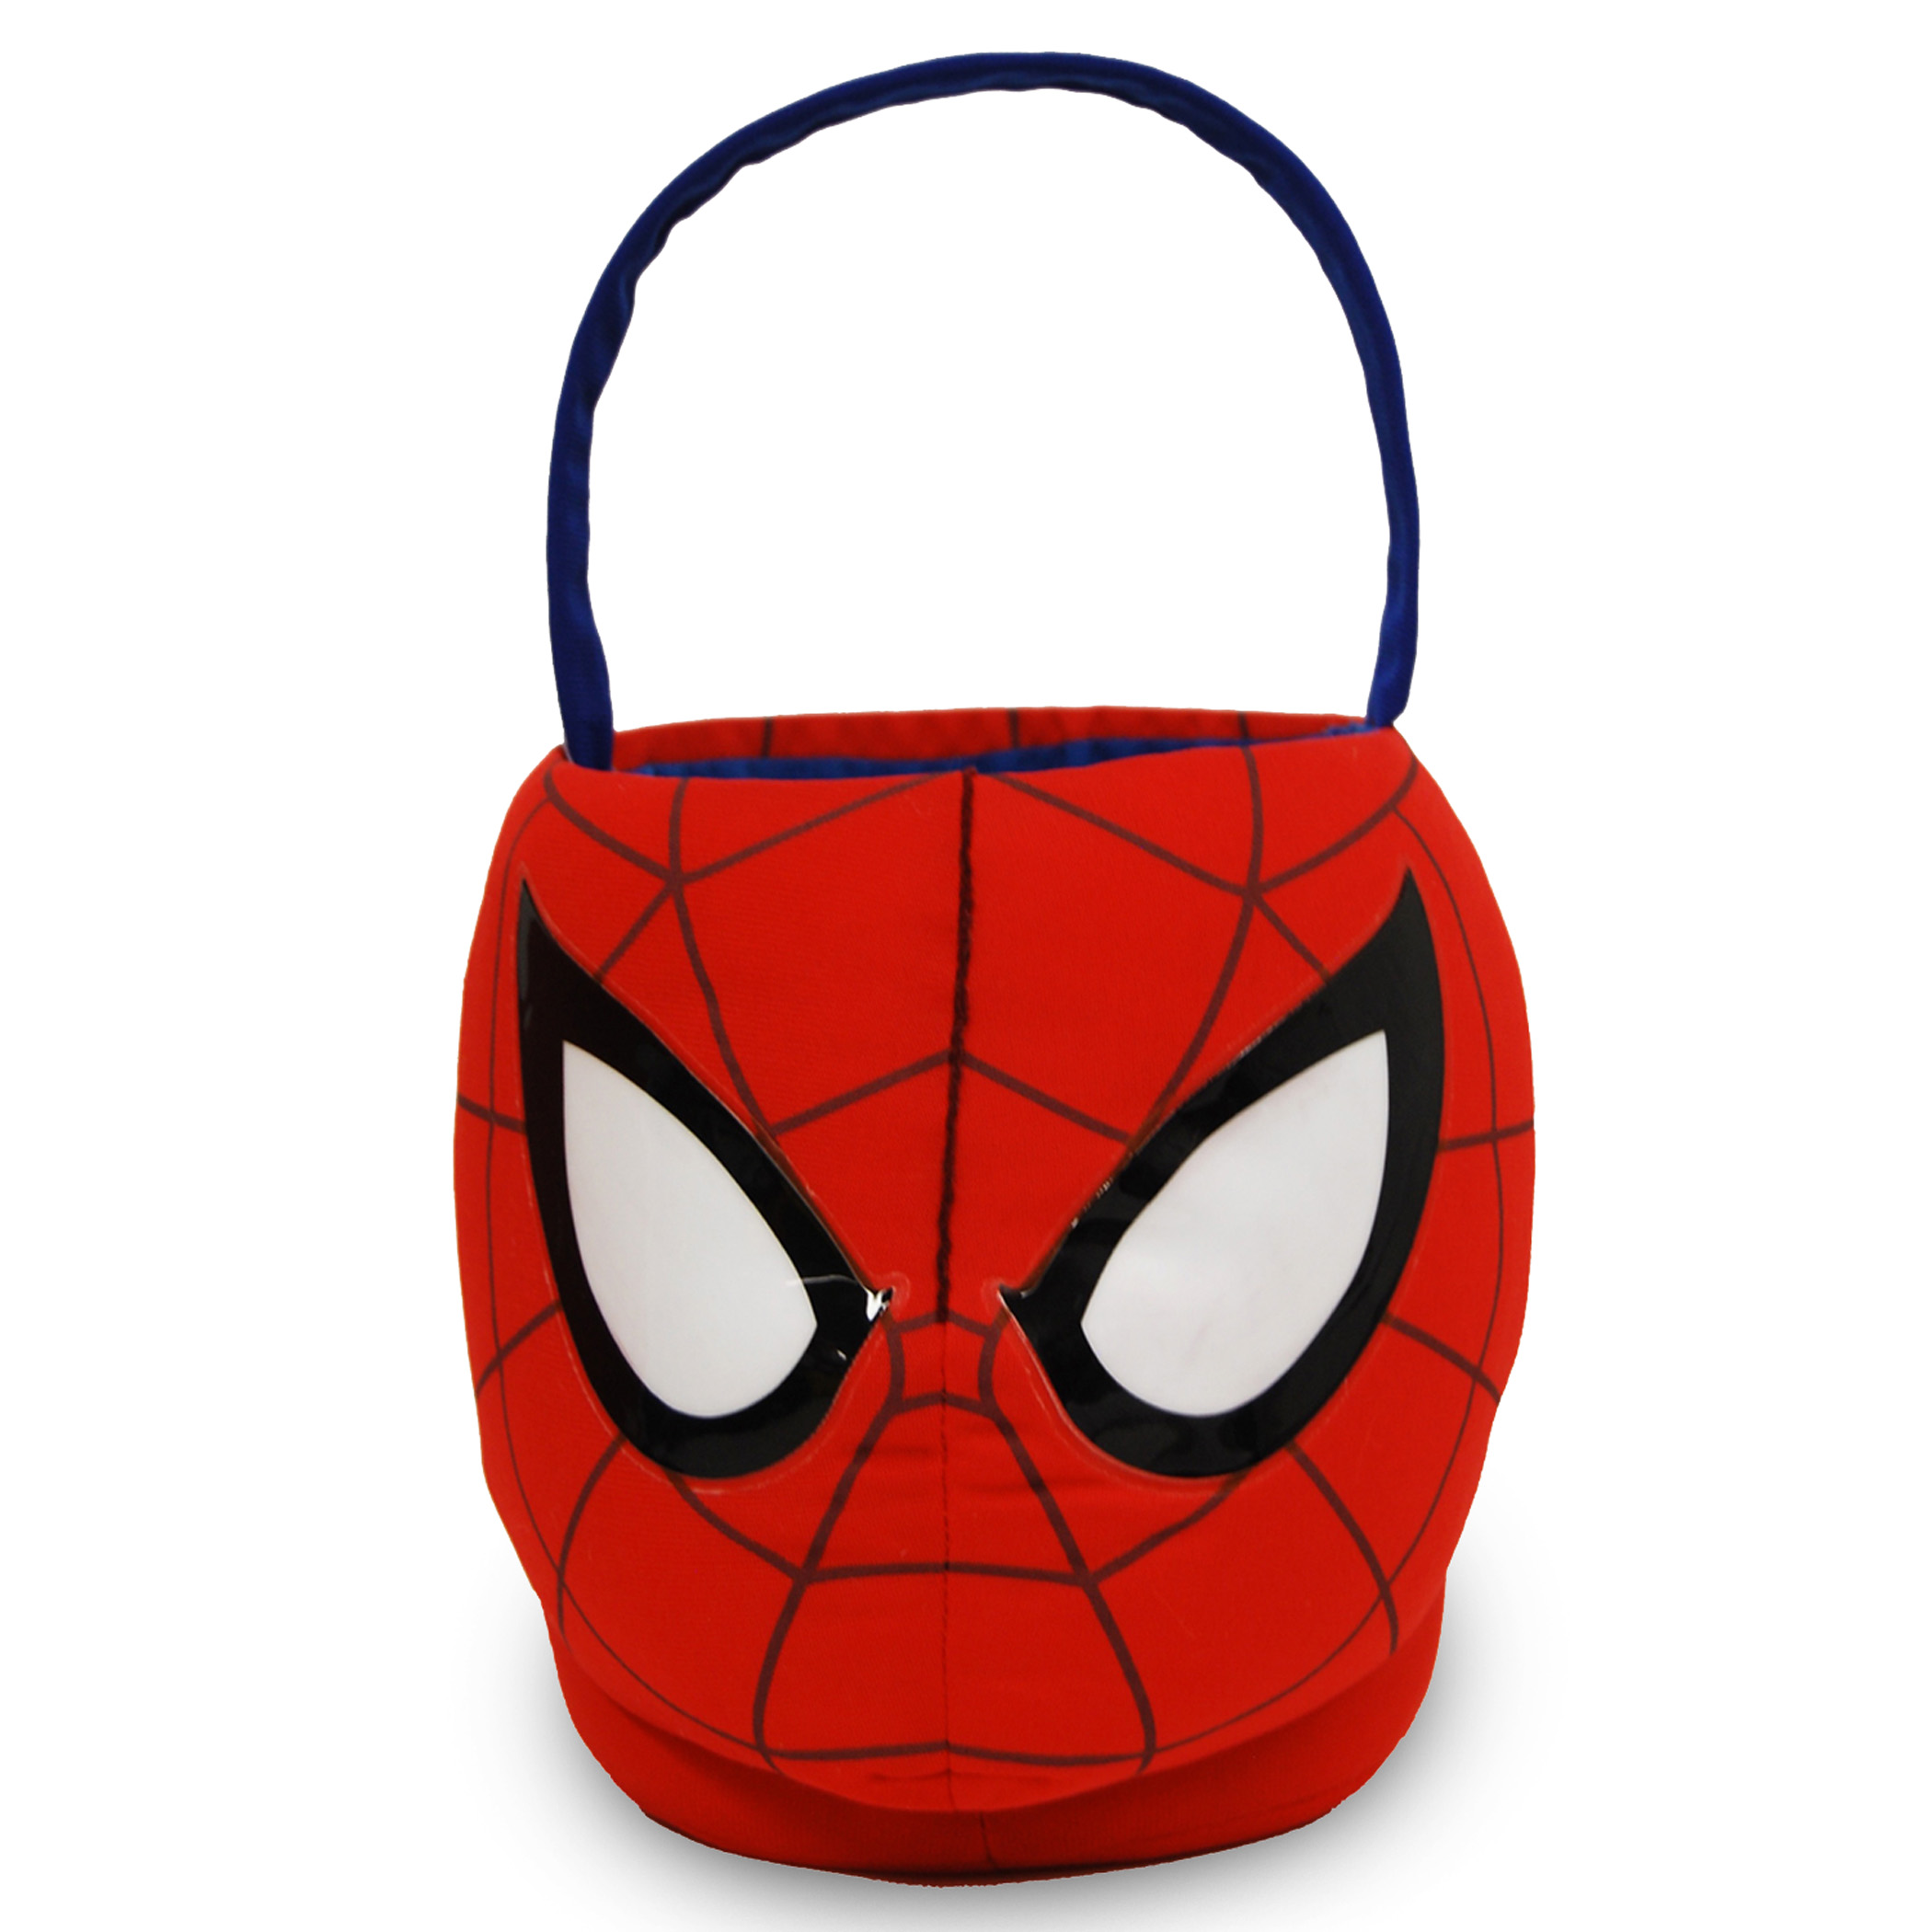 Disney Spider-man Spiderman Jumbo Plush Halloween / Storage Basket $4.49 + Free Shipping w/ Walmart+ or on $35+